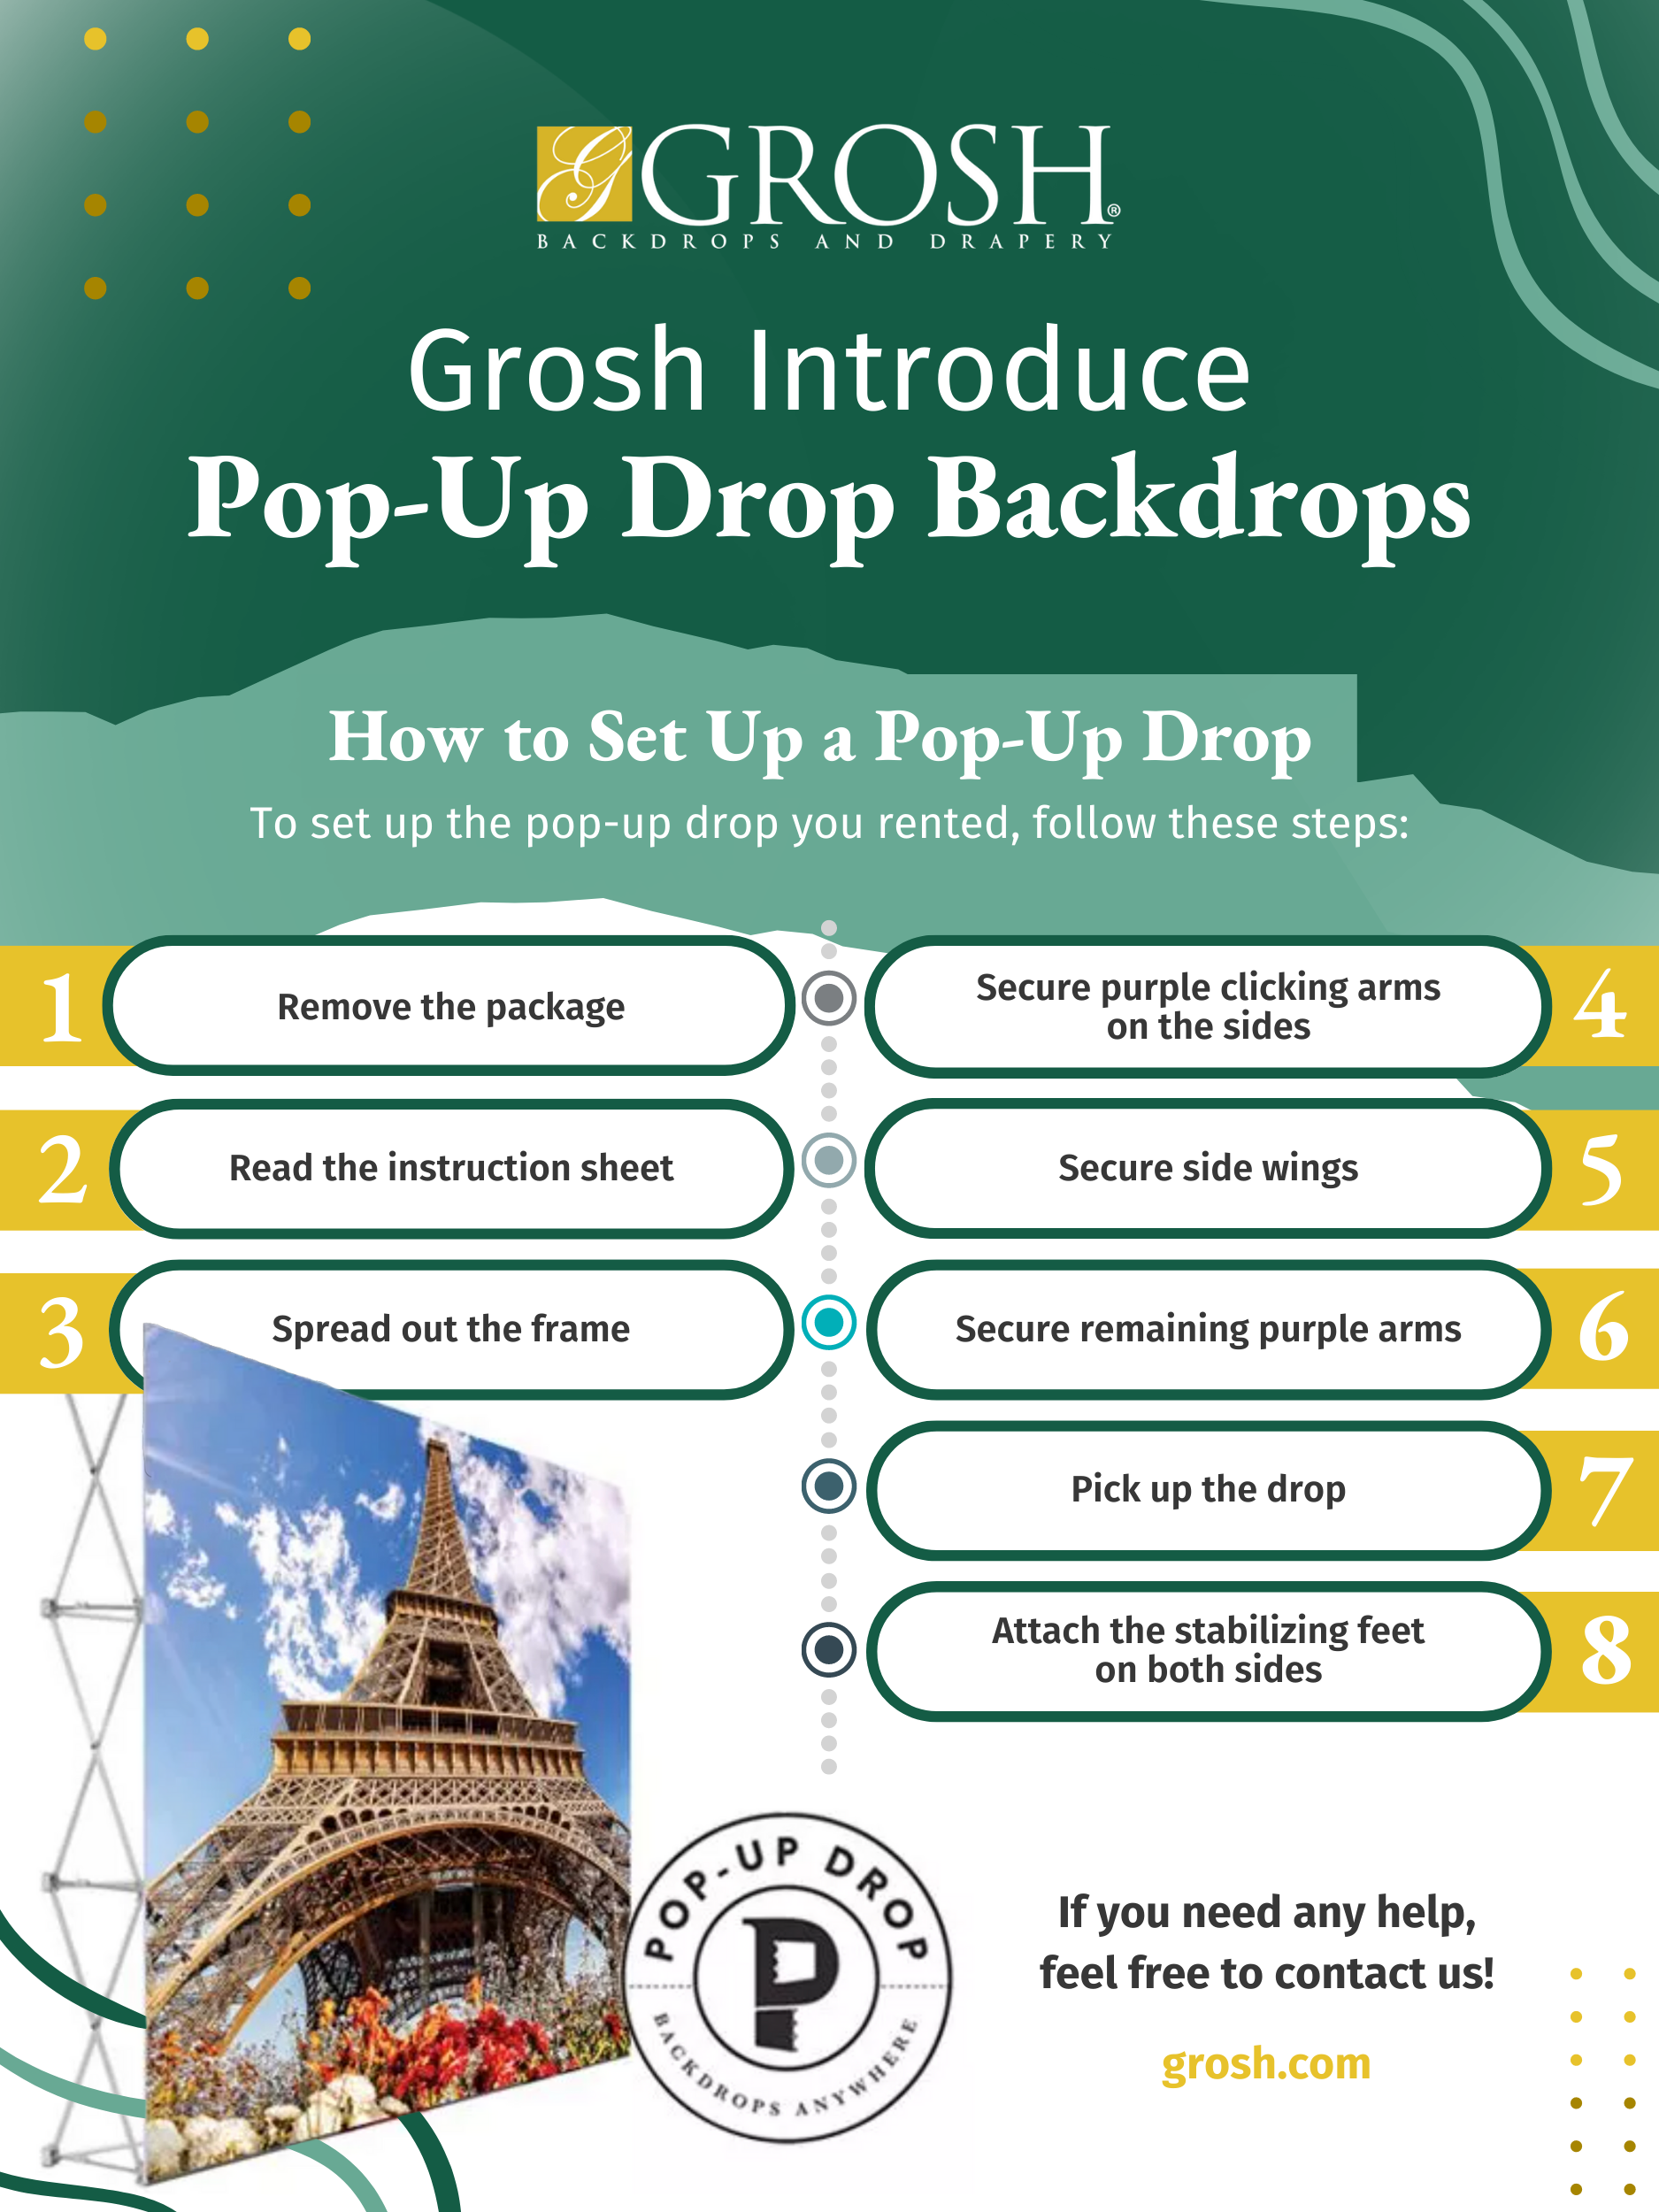 Grosh Introduces Pop-Up Drop Backdrops